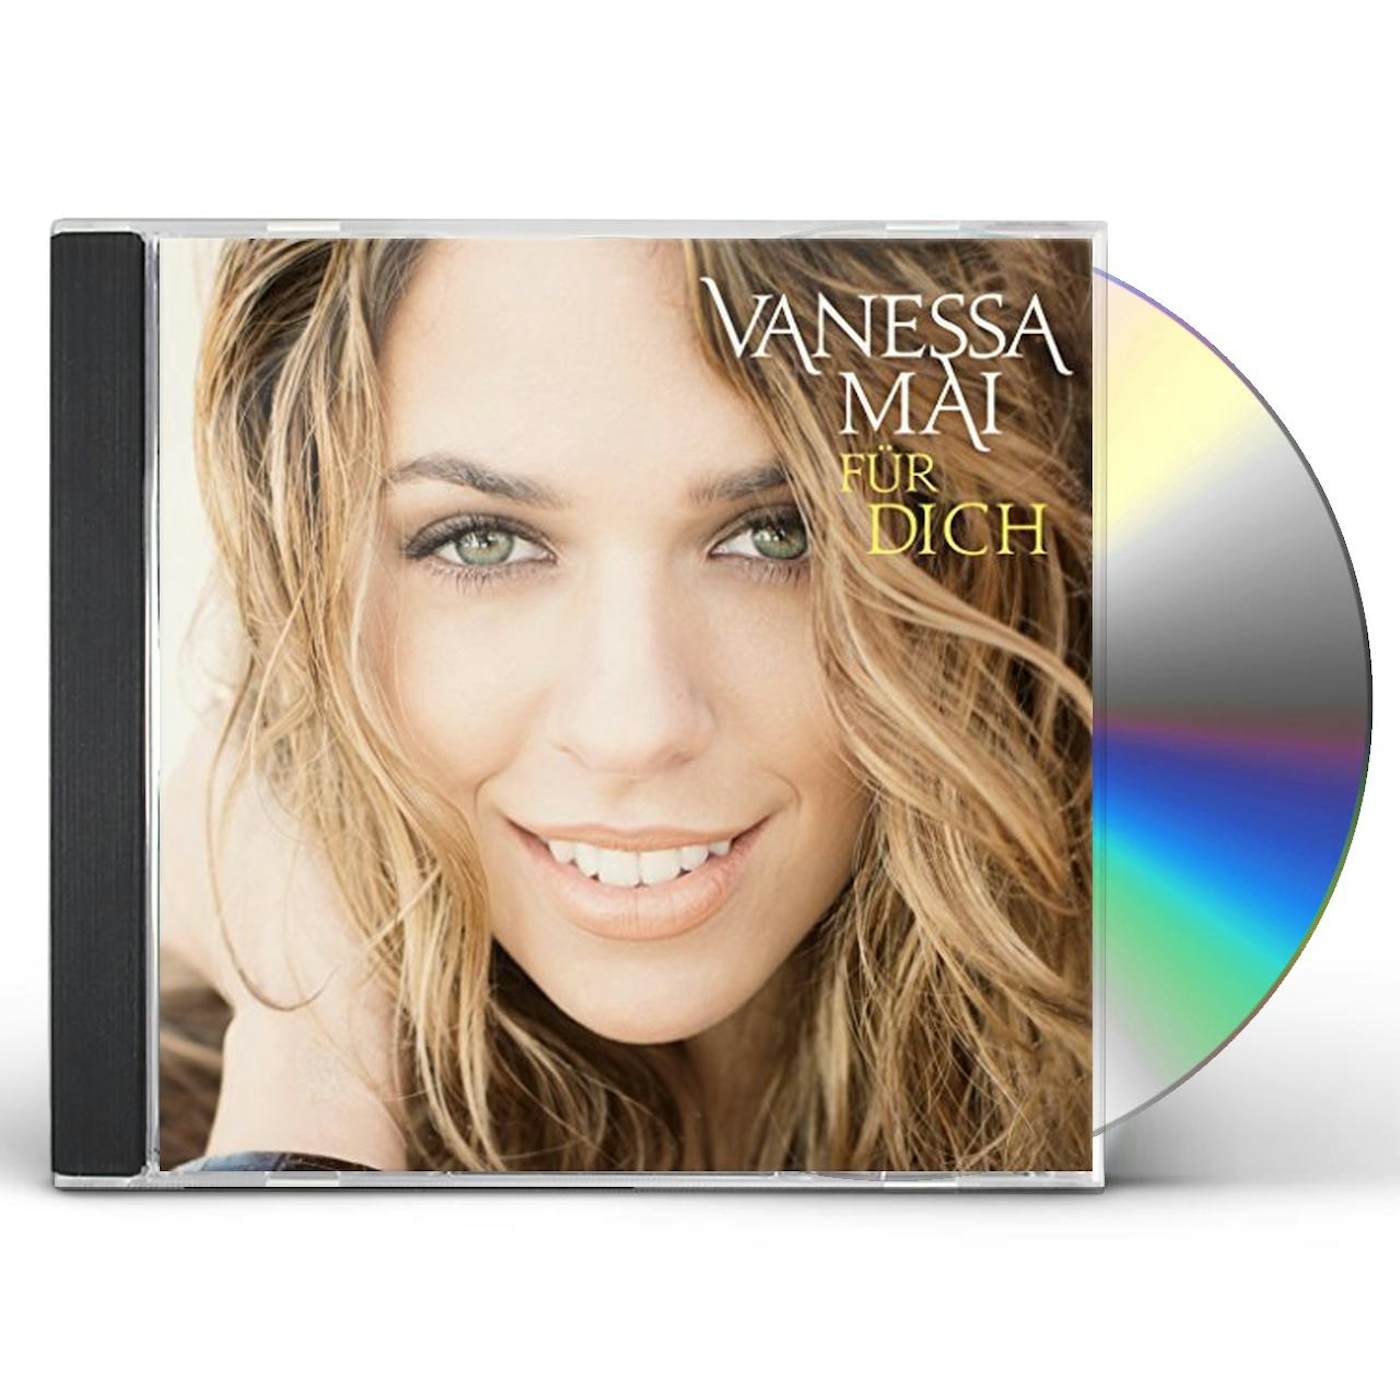 Vanessa Mai FUR DICH CD